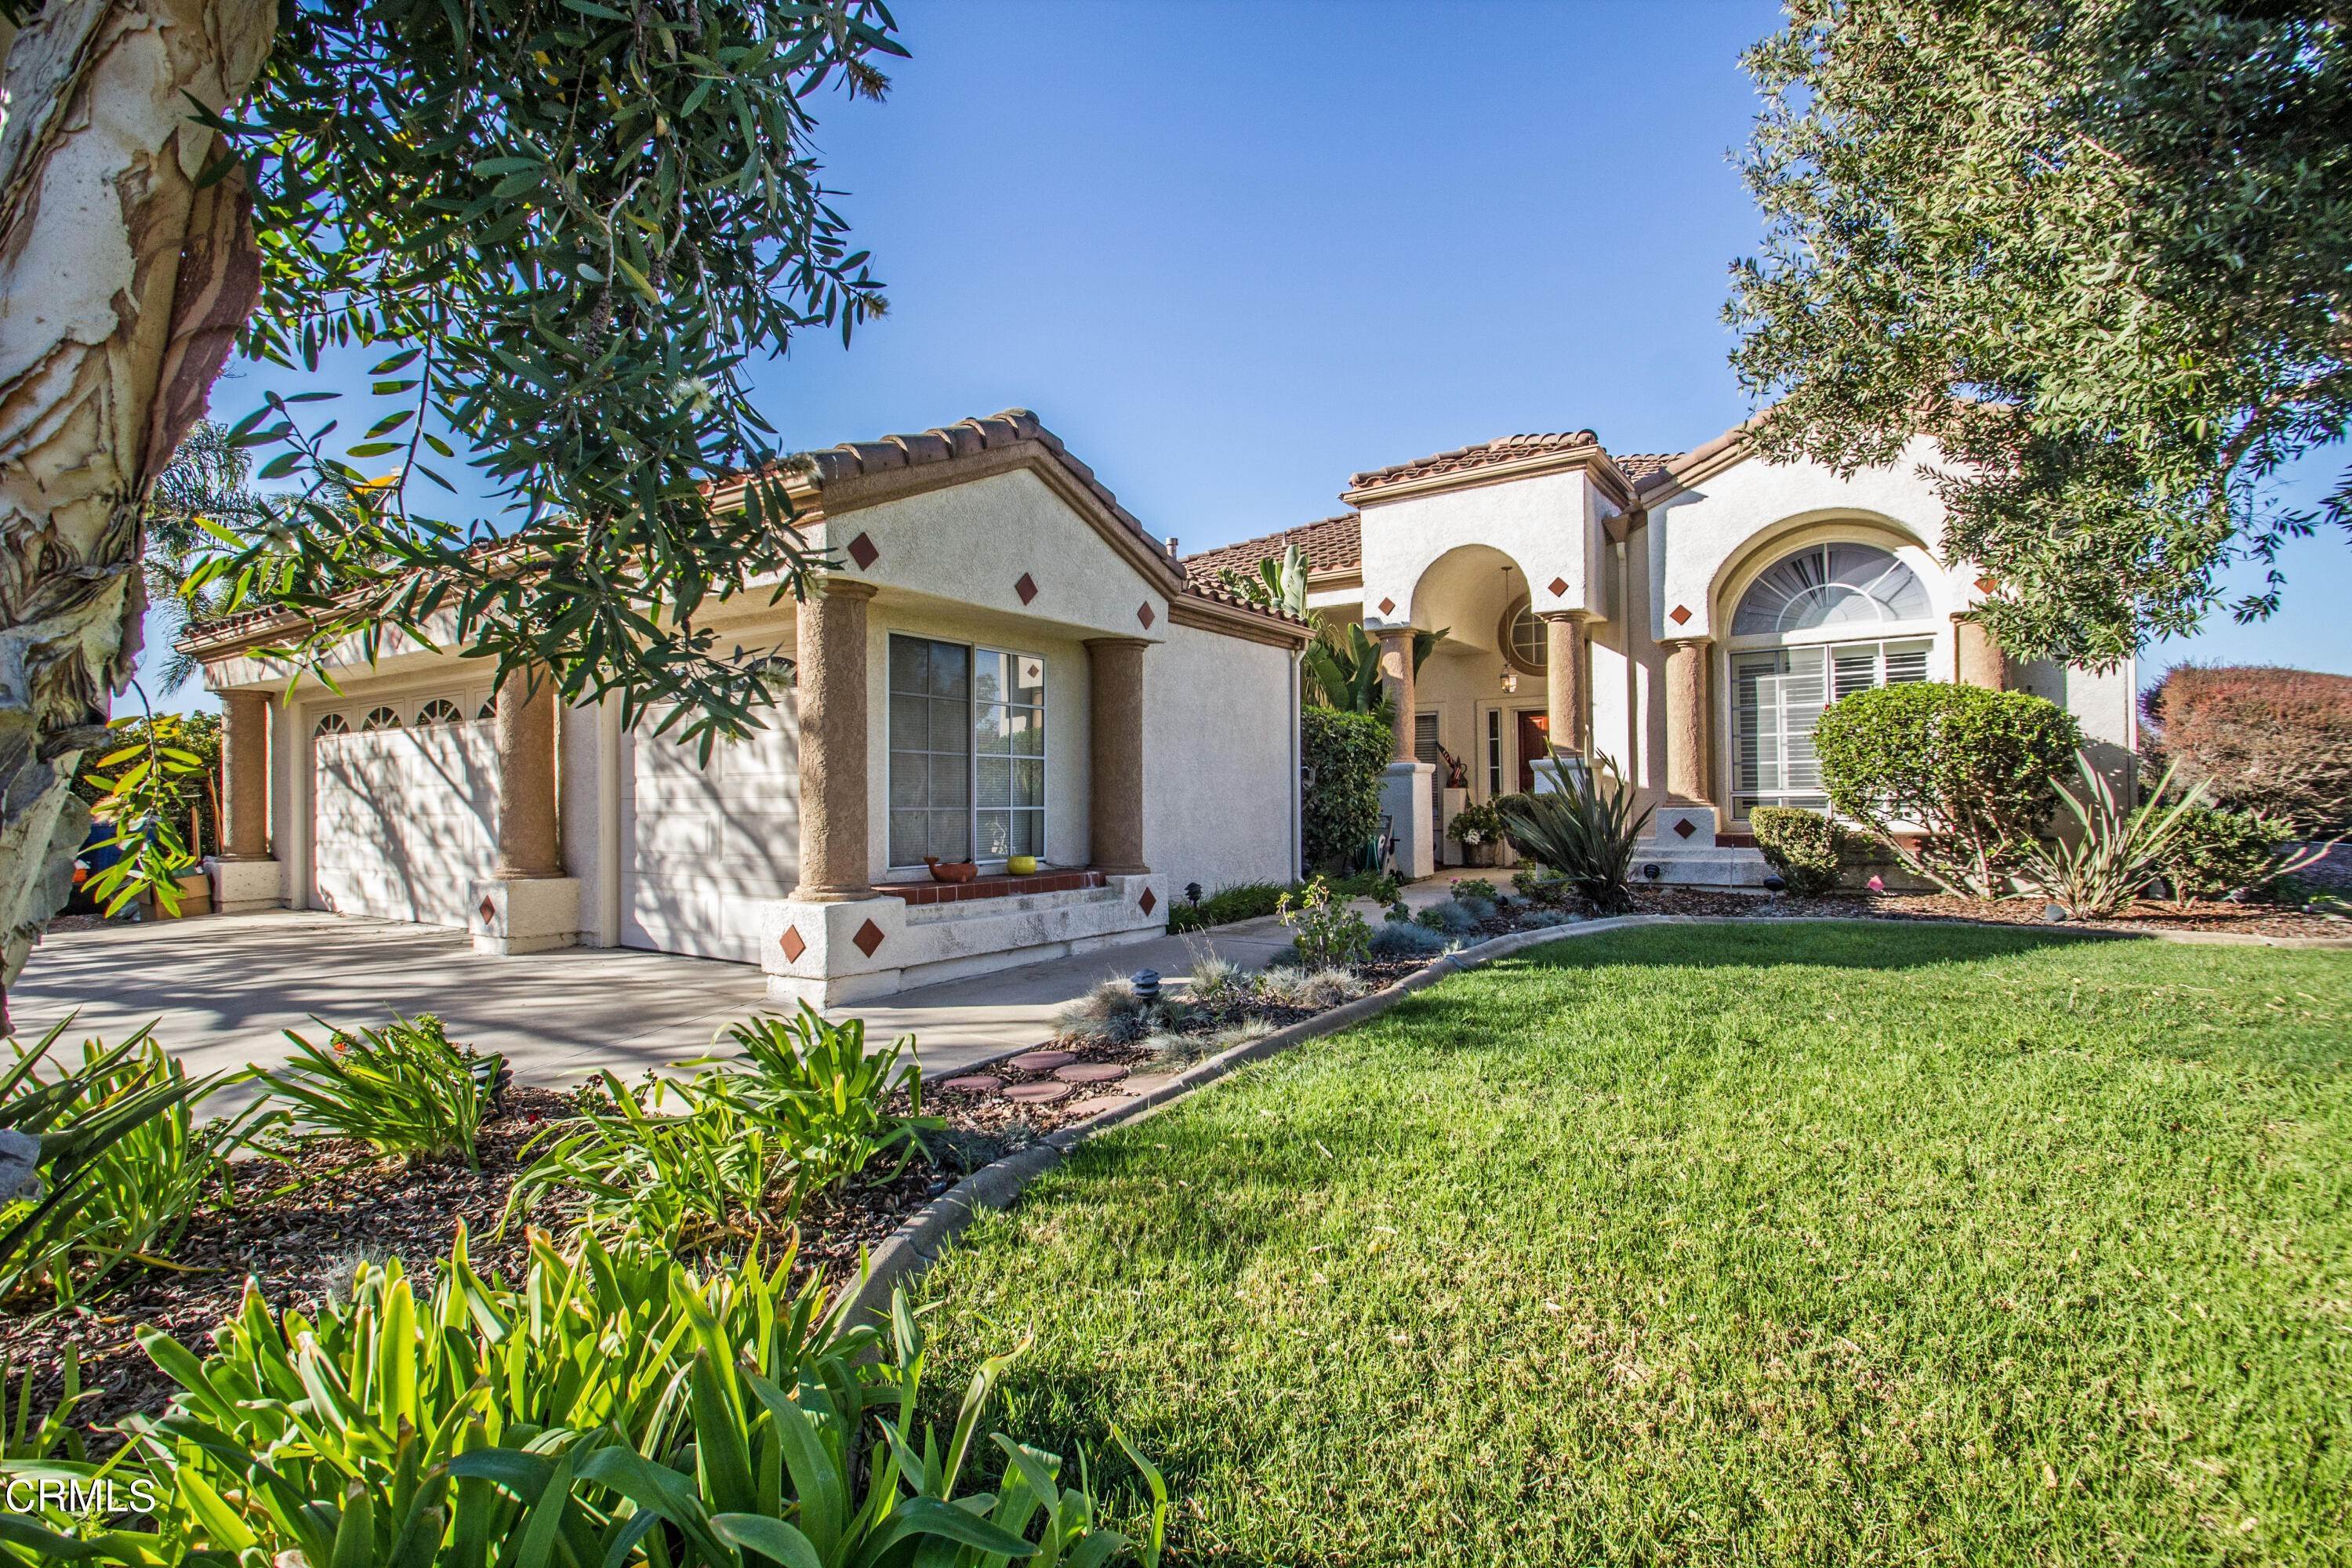 2. Single Family Homes for Sale at 579 Deseo Avenue Camarillo, California 93010 United States